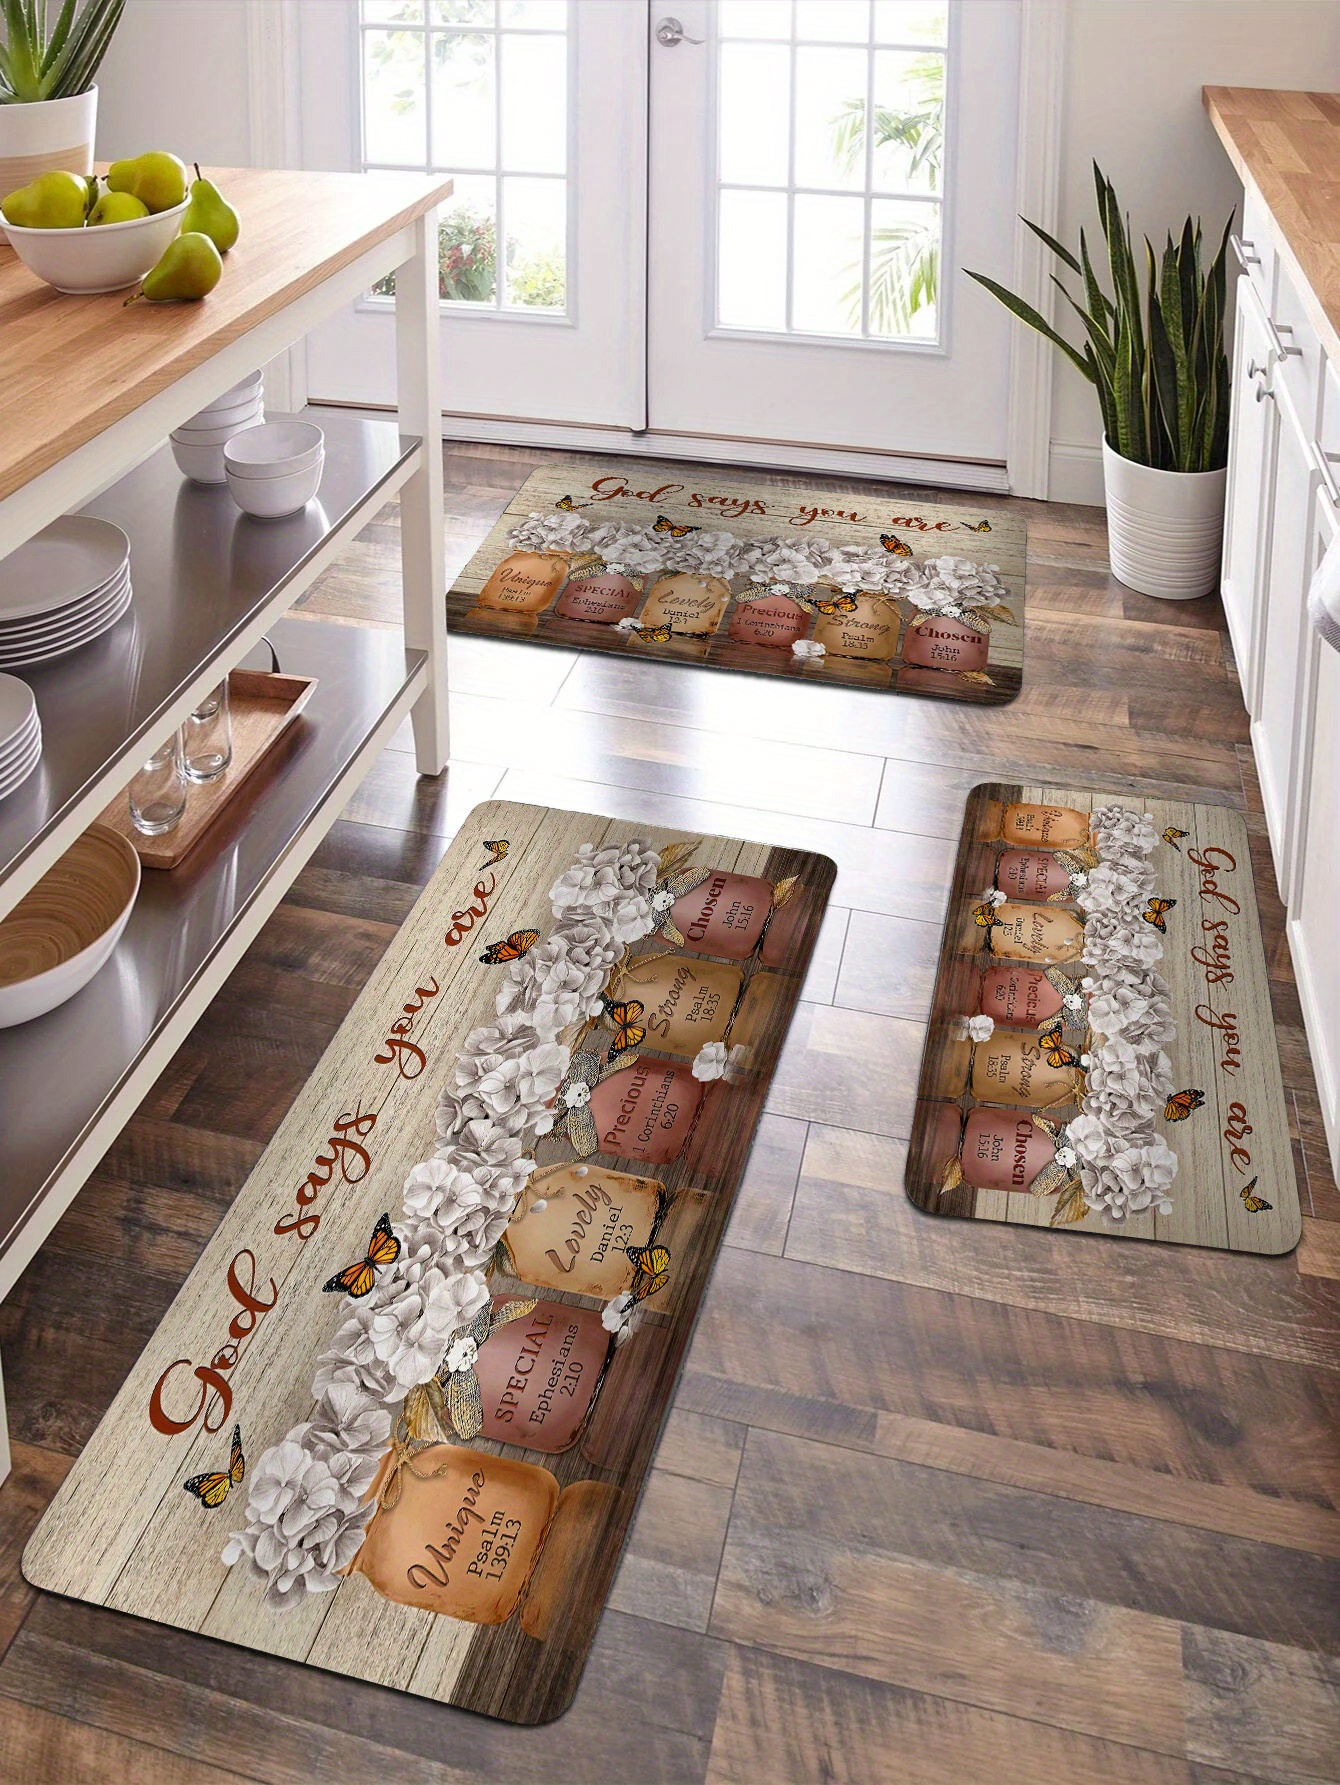 Juego de alfombras de cocina, granada, grano de fruta, primer plano,  textura de grano claramente visible, tapete de cocina para piso,  antideslizante